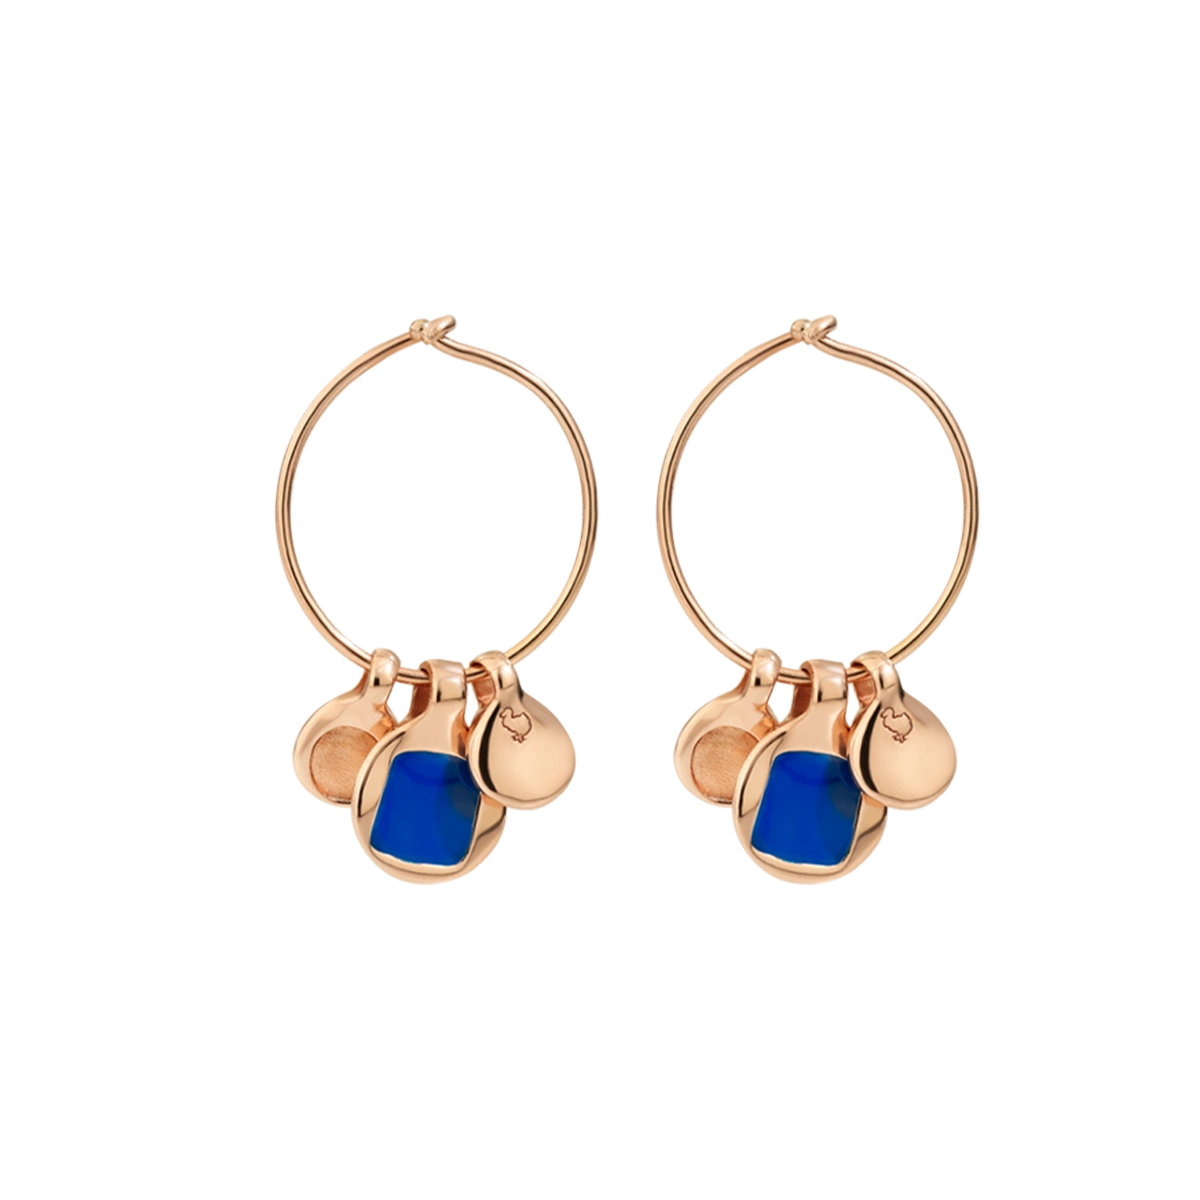 Dodo Bazaar "Hoop" earrings